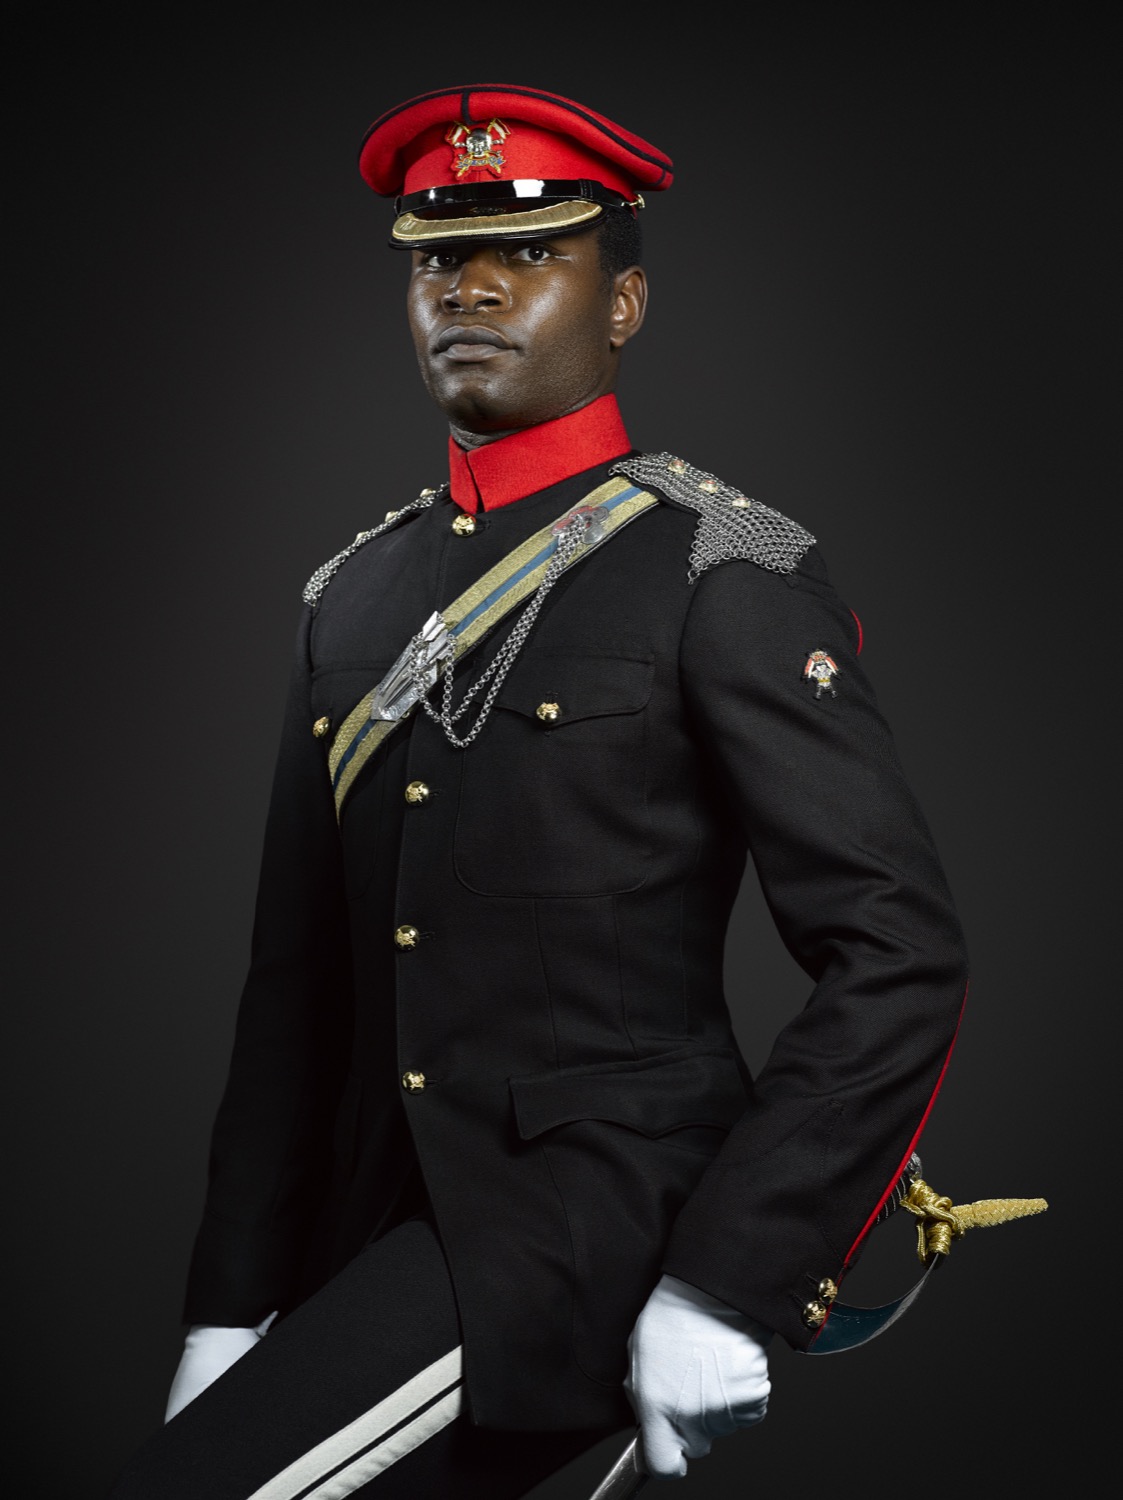 The Royal Lancers Portraits (Military Portrait Photographer Rory Lewis